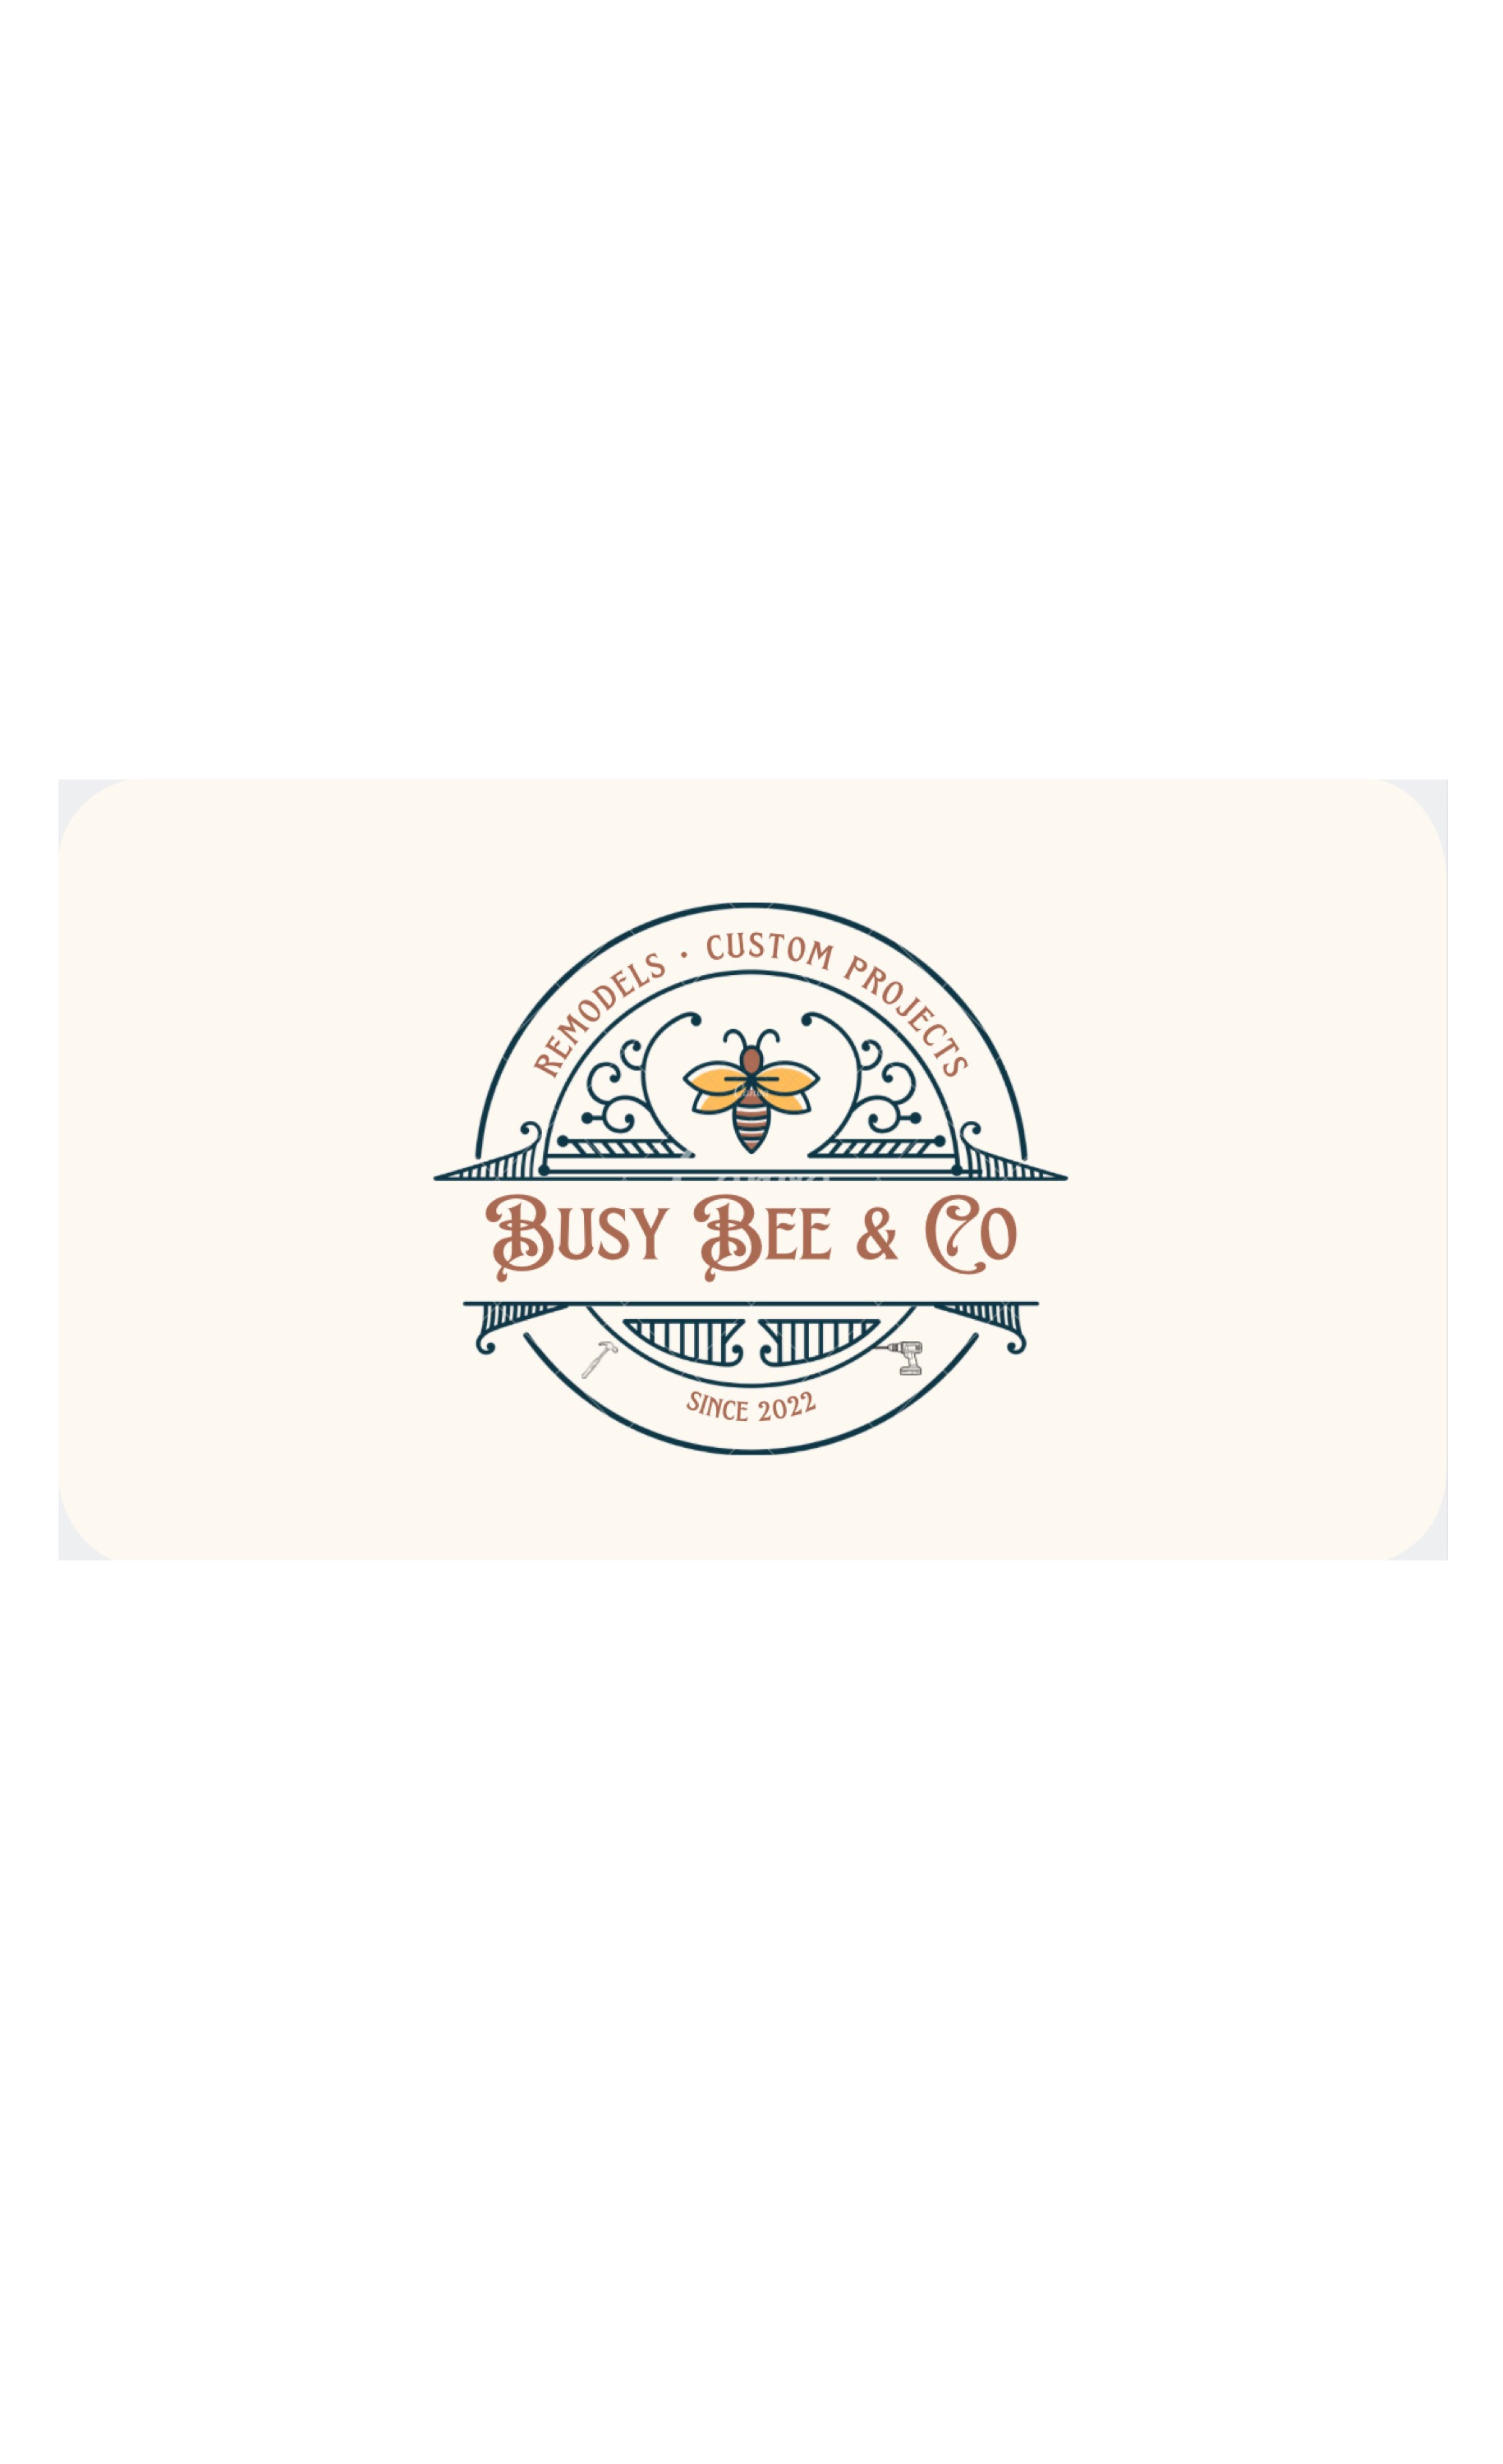 Busy Bee & Co llc Logo